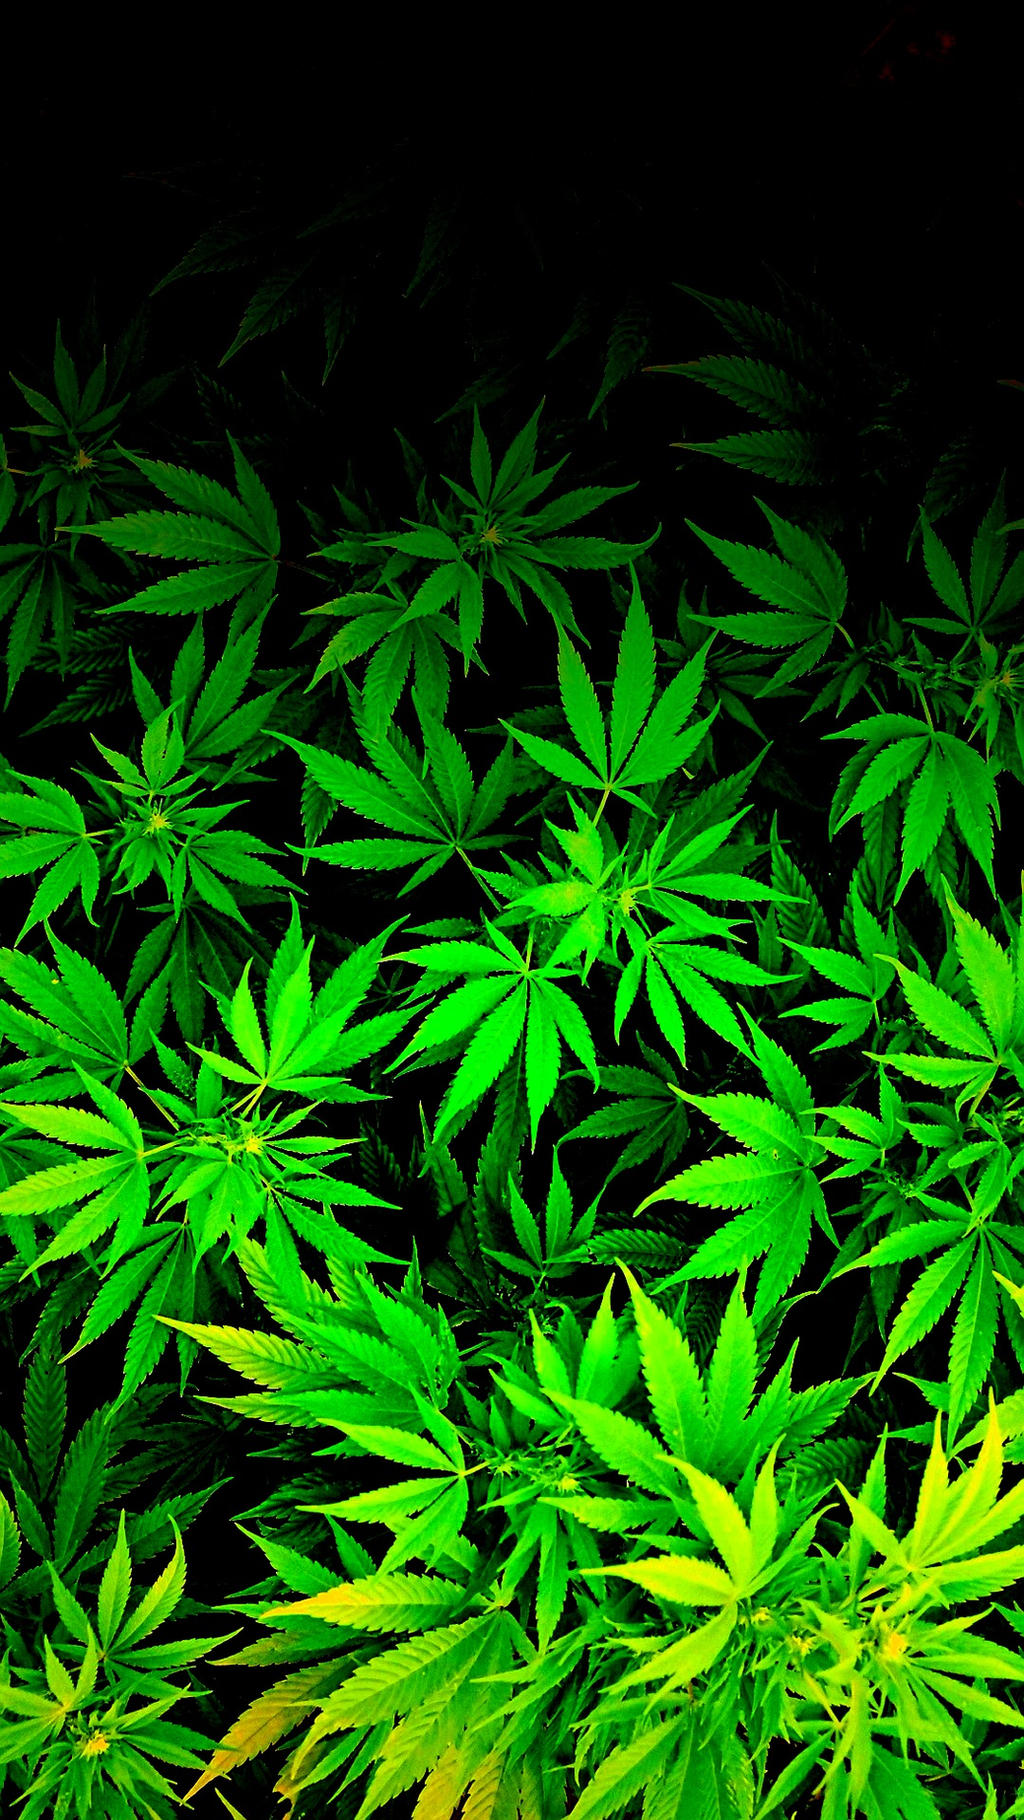 iPod/ iPhone weed marijuana cannabis Wallpaper by thetruemask on DeviantArt